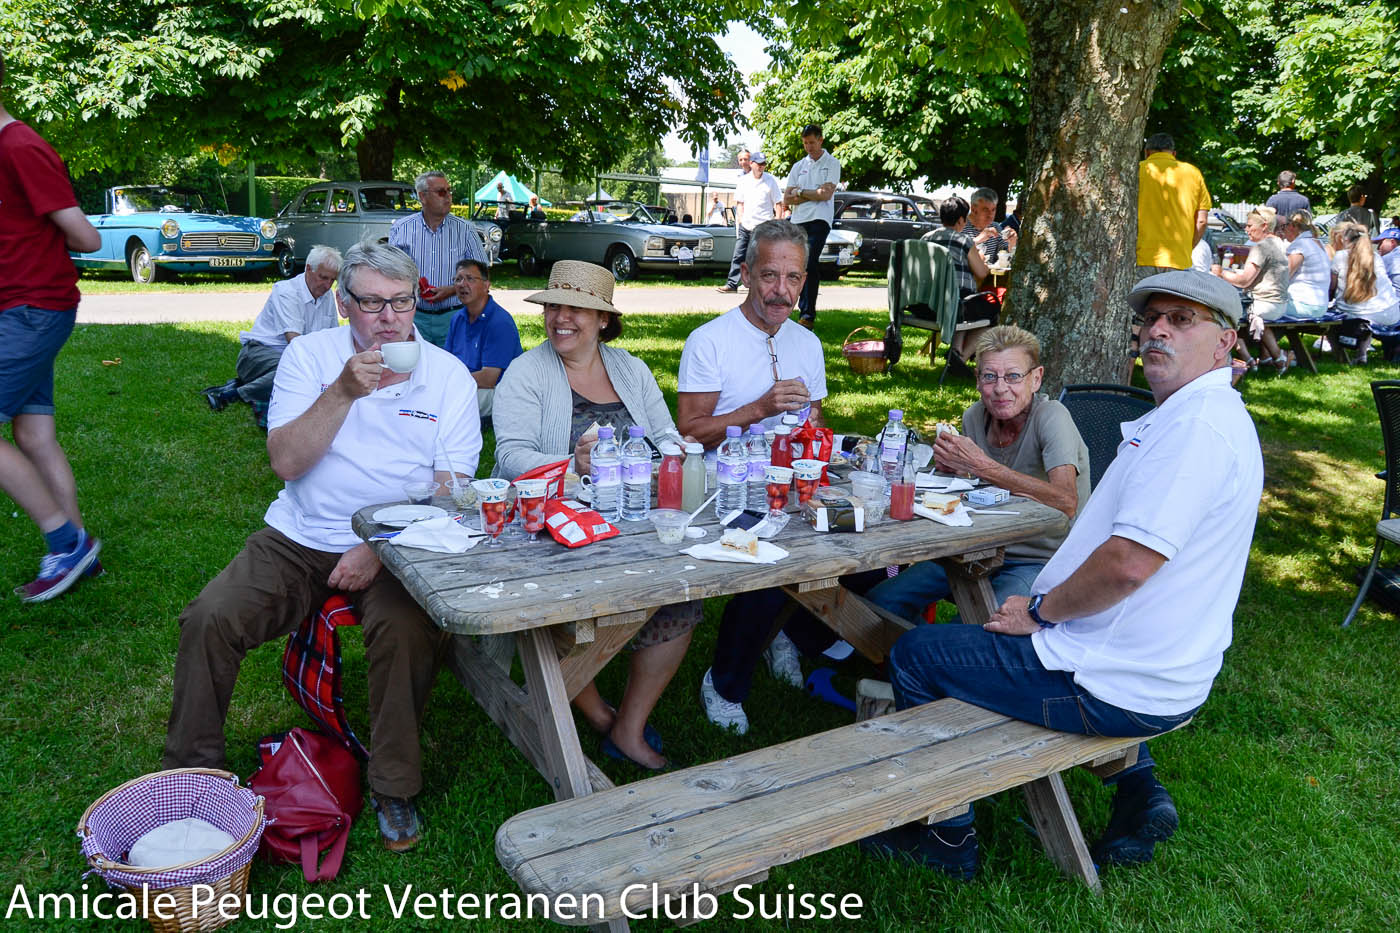 Internationales Peugeot Veteranen Treffen in England, Juni 2014 (Bild Lechner)